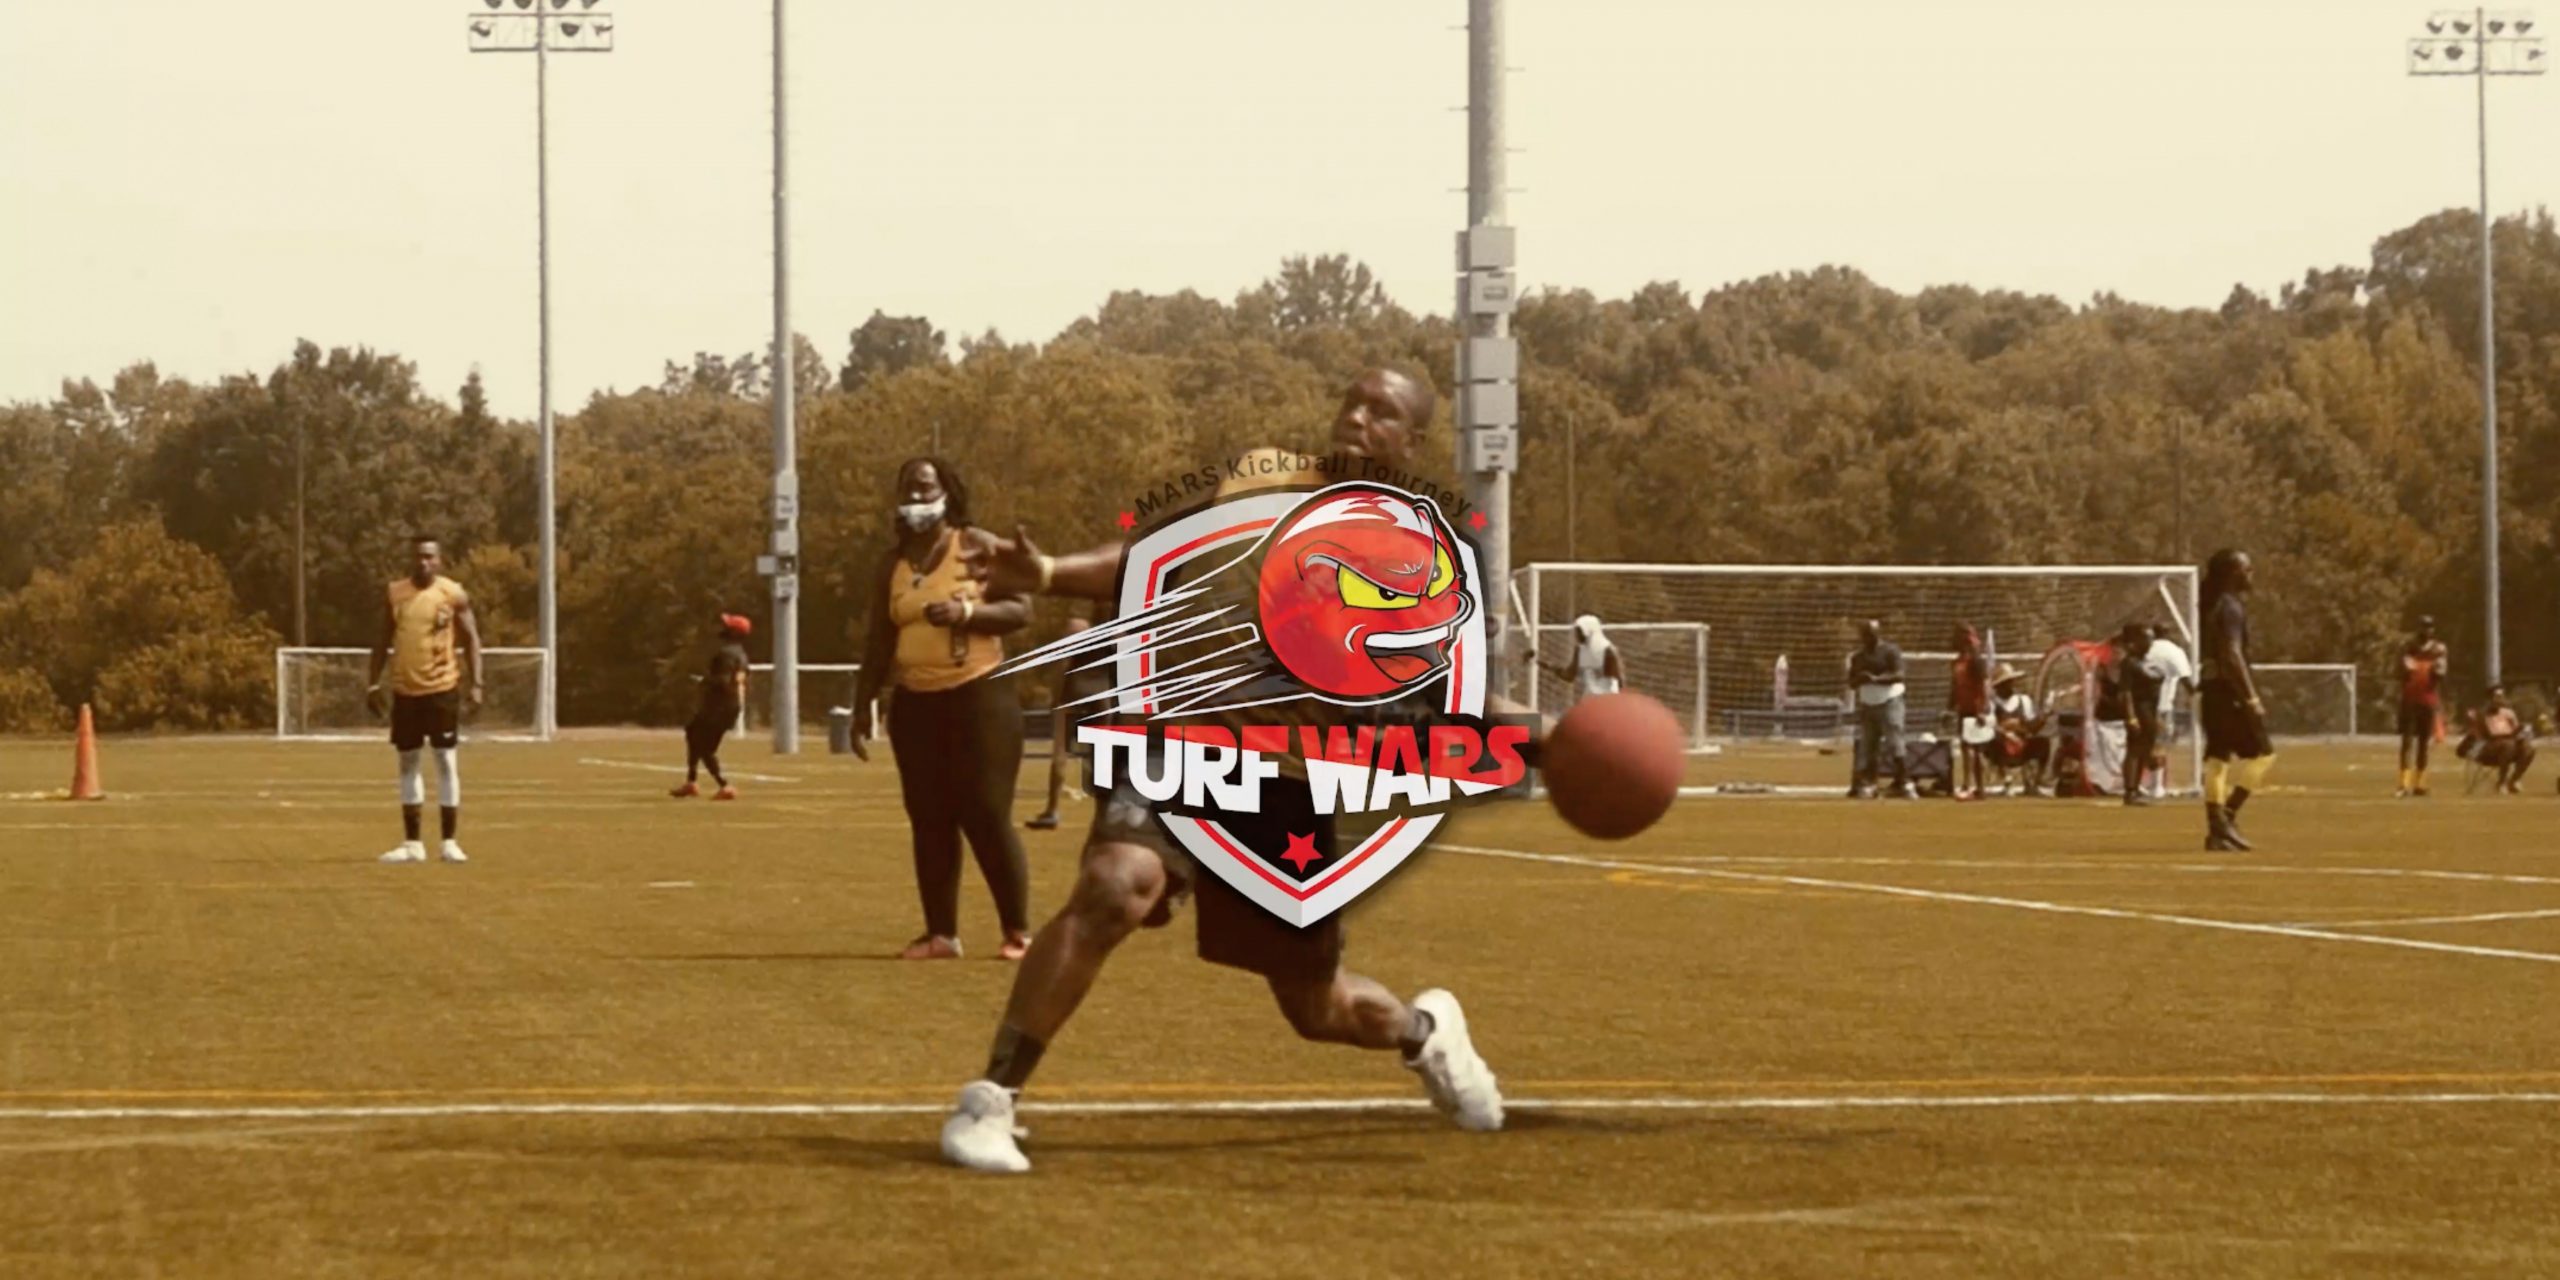 Not Your Average Kickball....This is Turf Wars! AWordPressSite